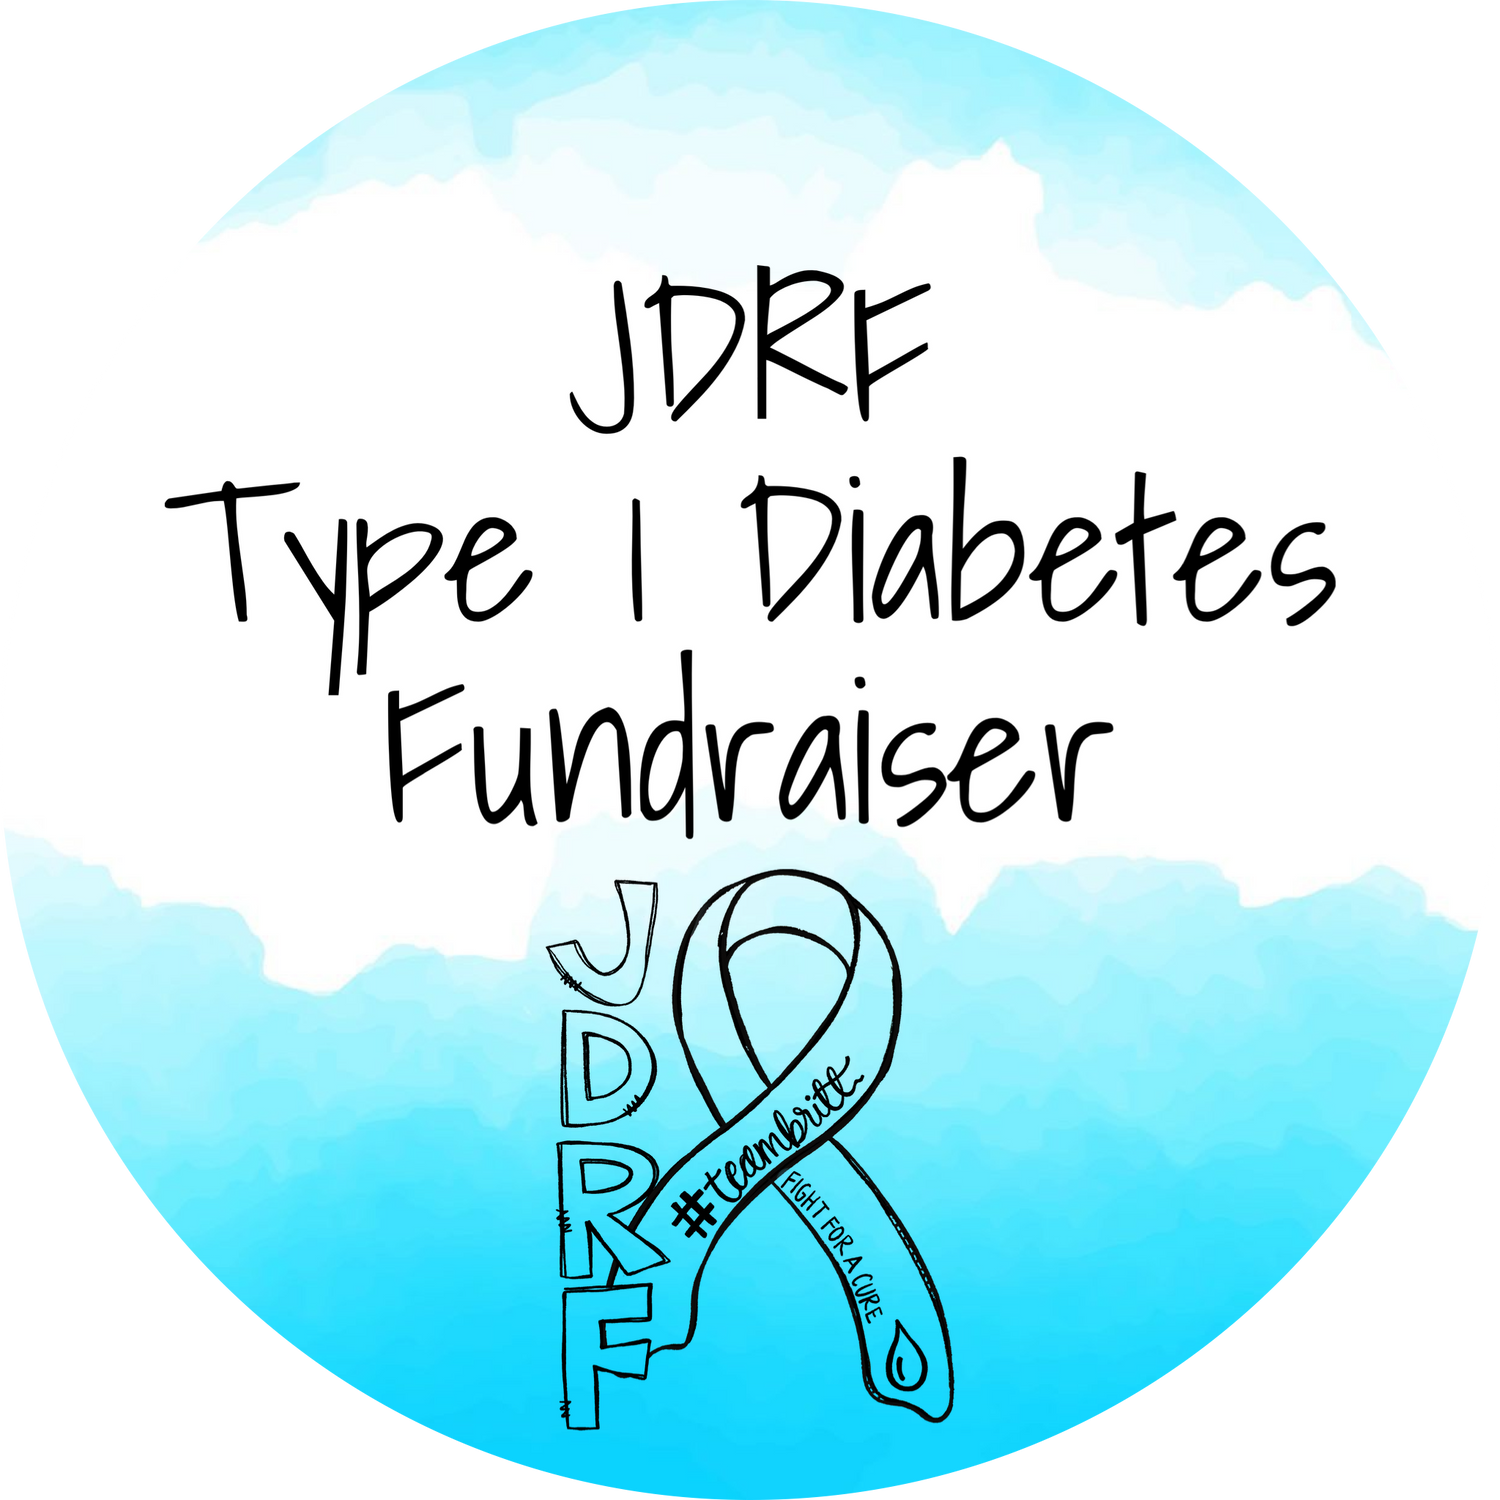 JDRF - Type 1 Diabetes Fundraiser